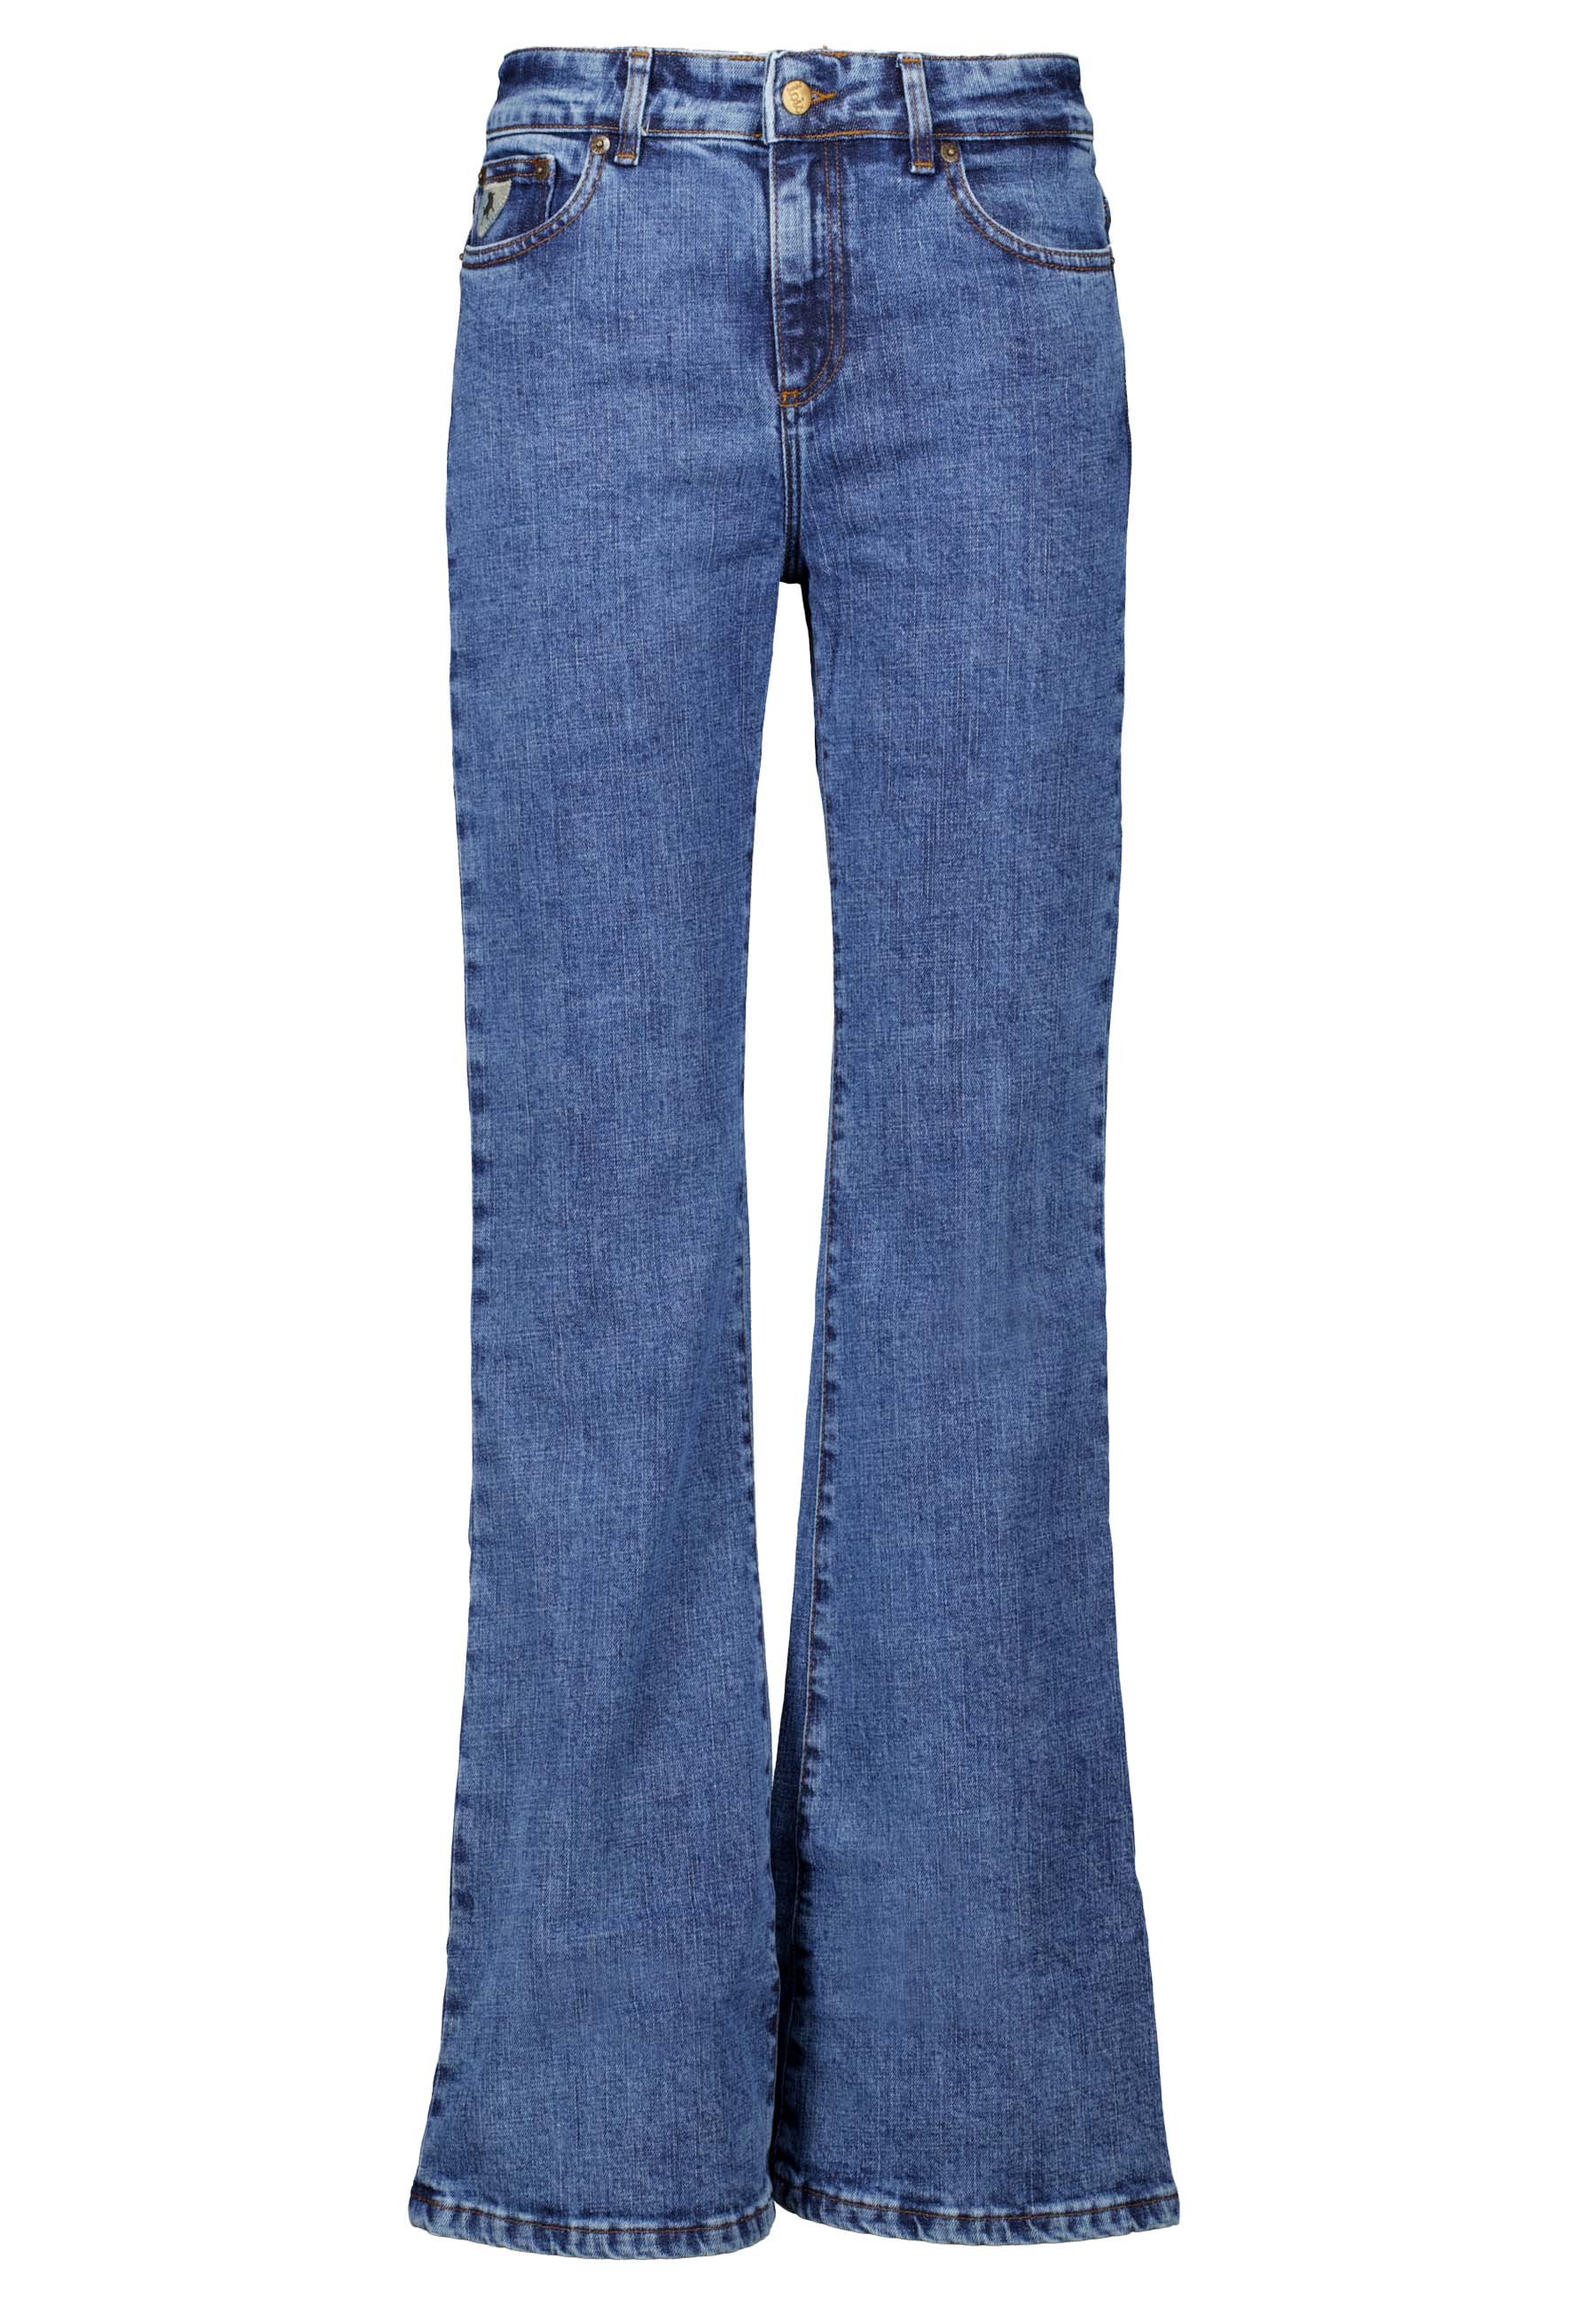 Lois Raval comfy jeans blauw Dames maat 27/34